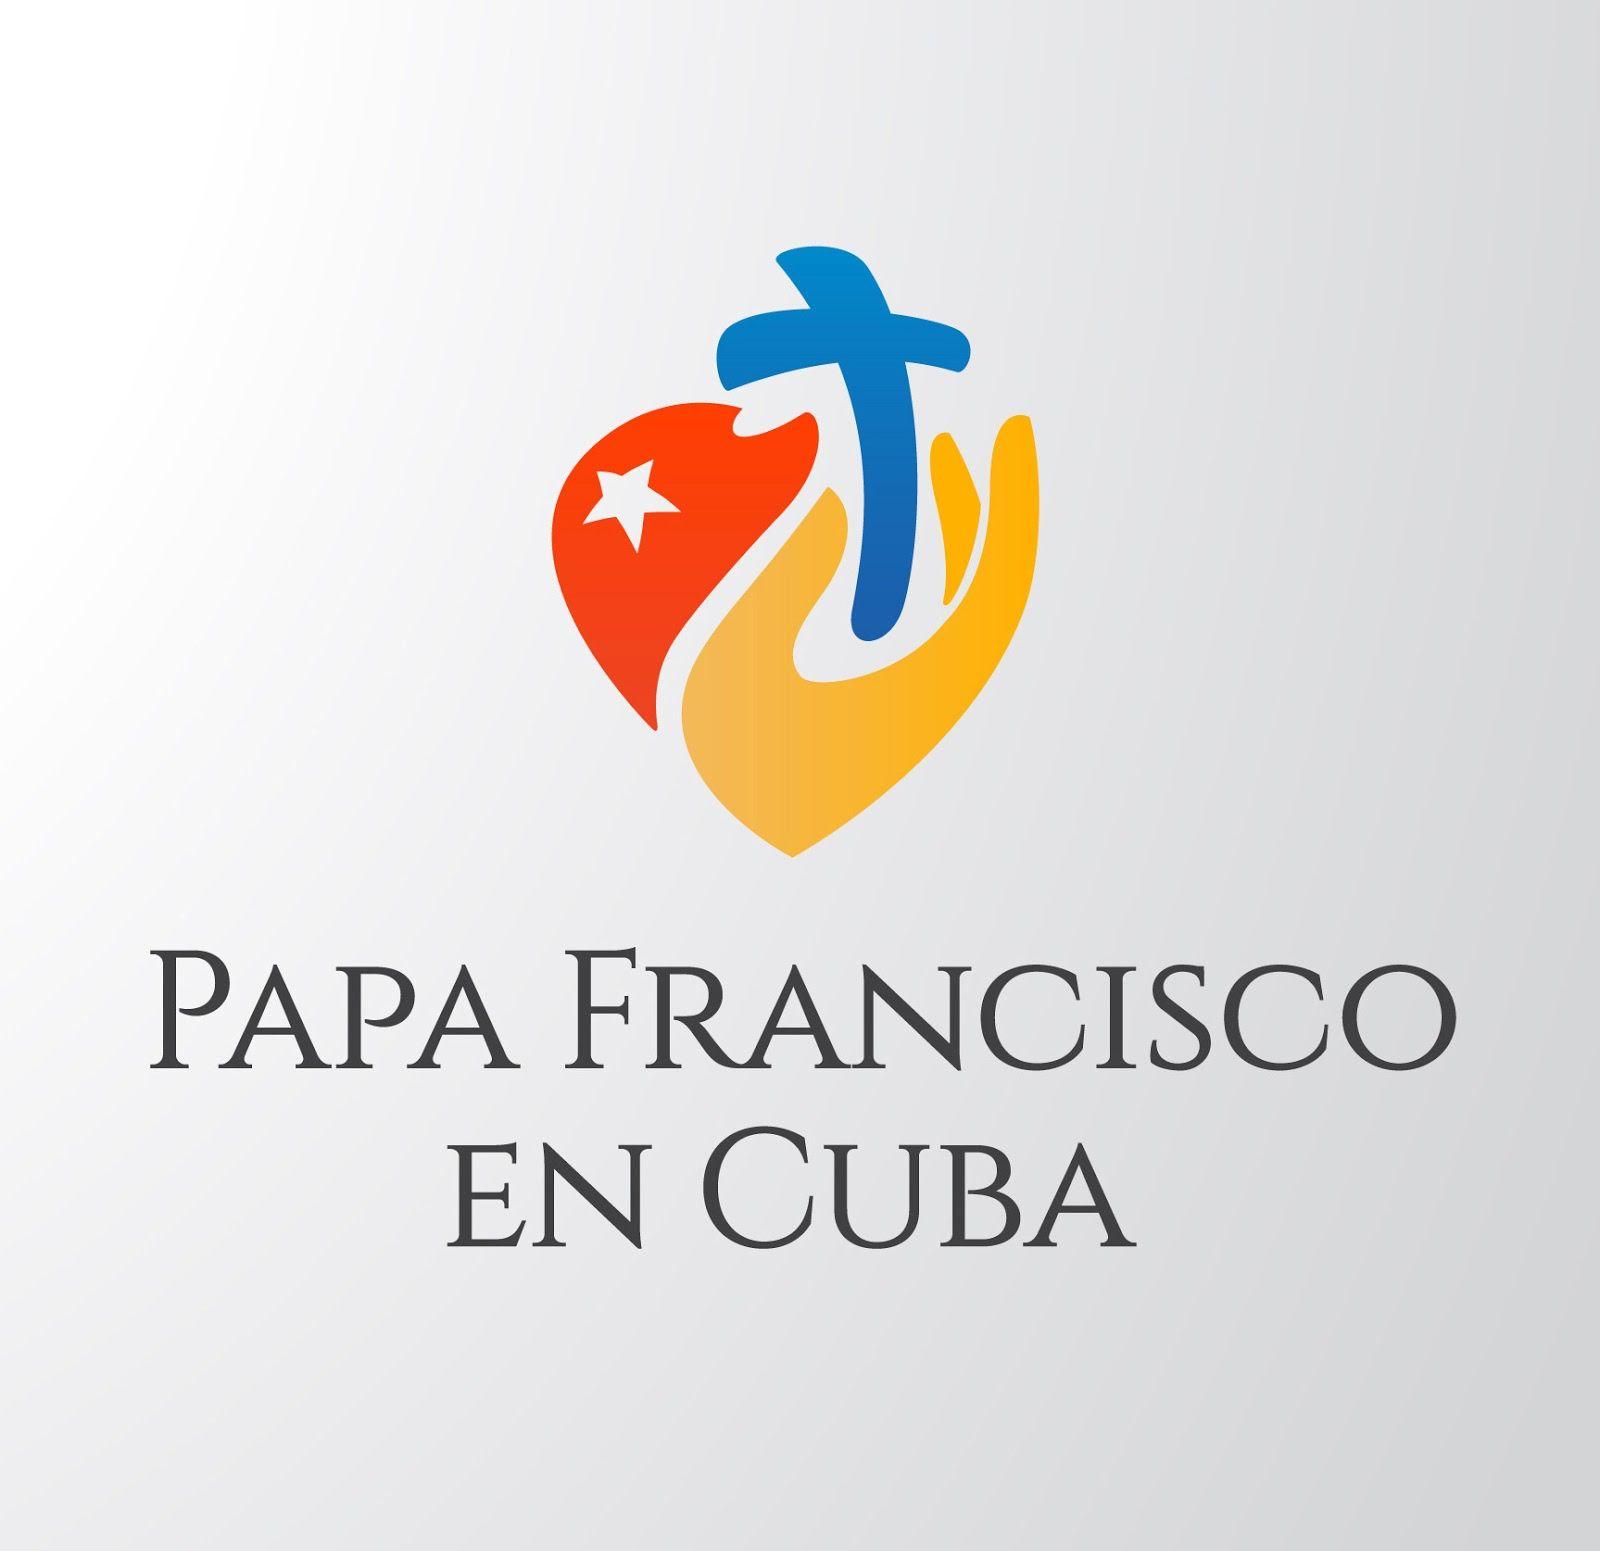 Papal Logo - Logo for Papal Visit to Cuba Released - ZENIT - English